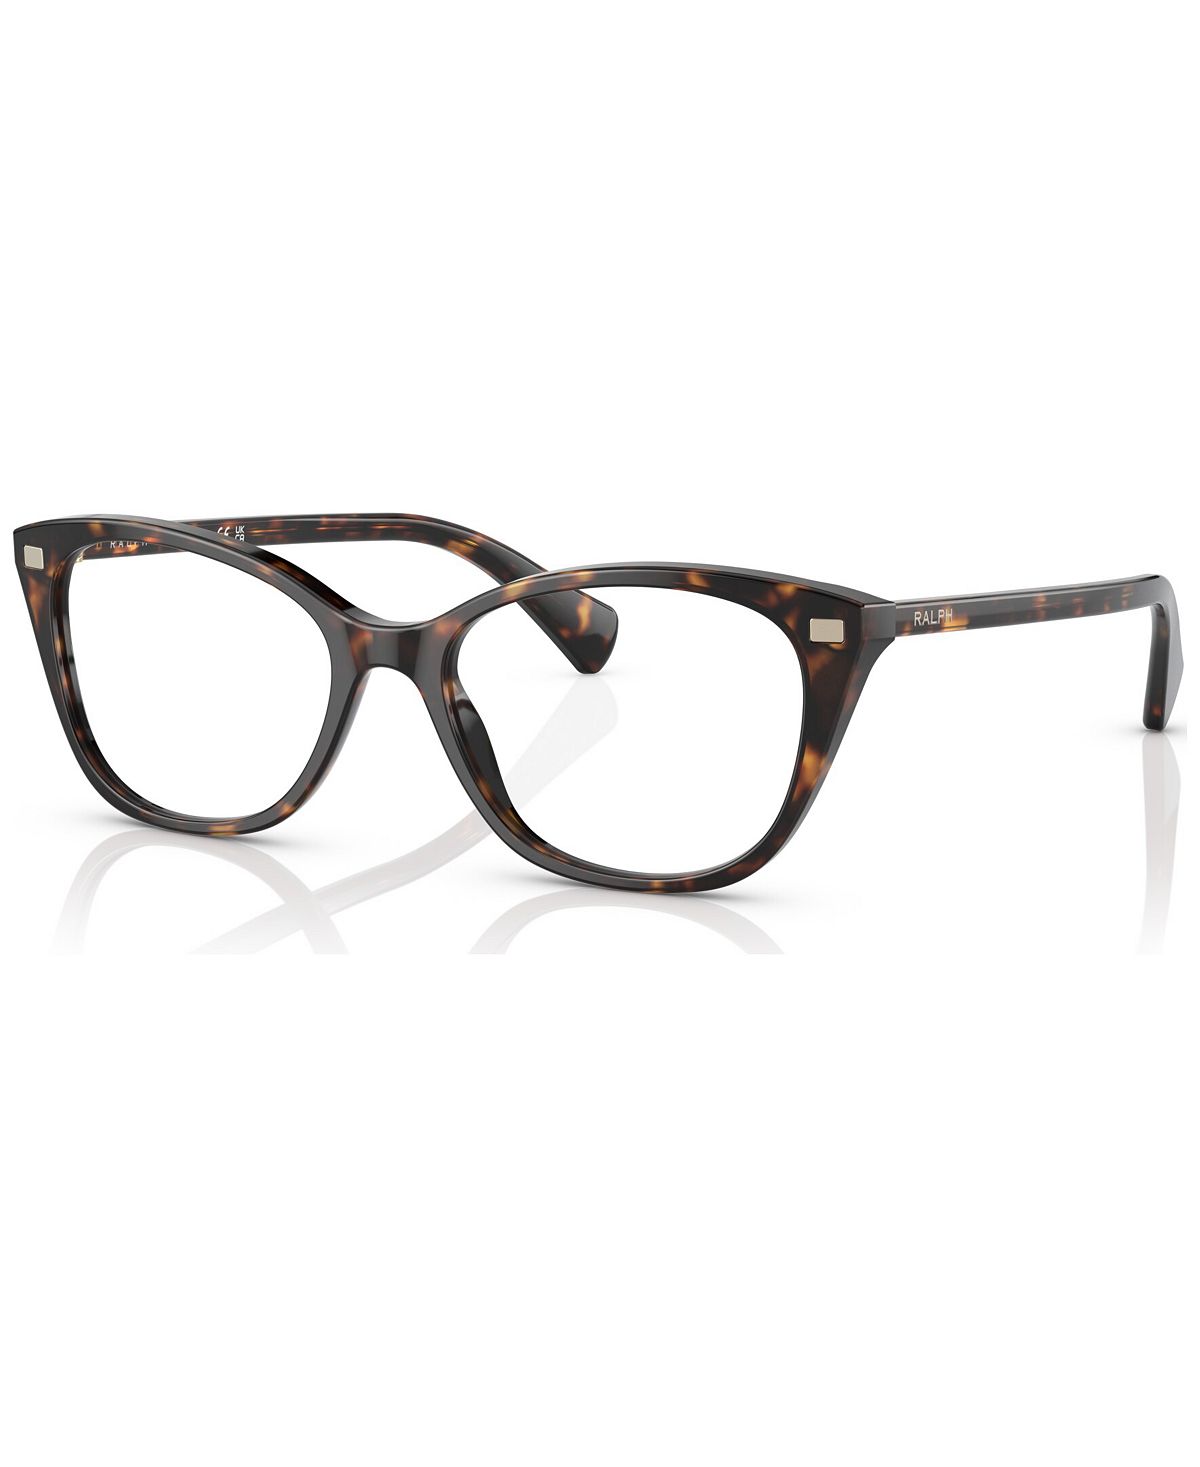 Женские очки-подушки, RA714653-O Ralph by Ralph Lauren